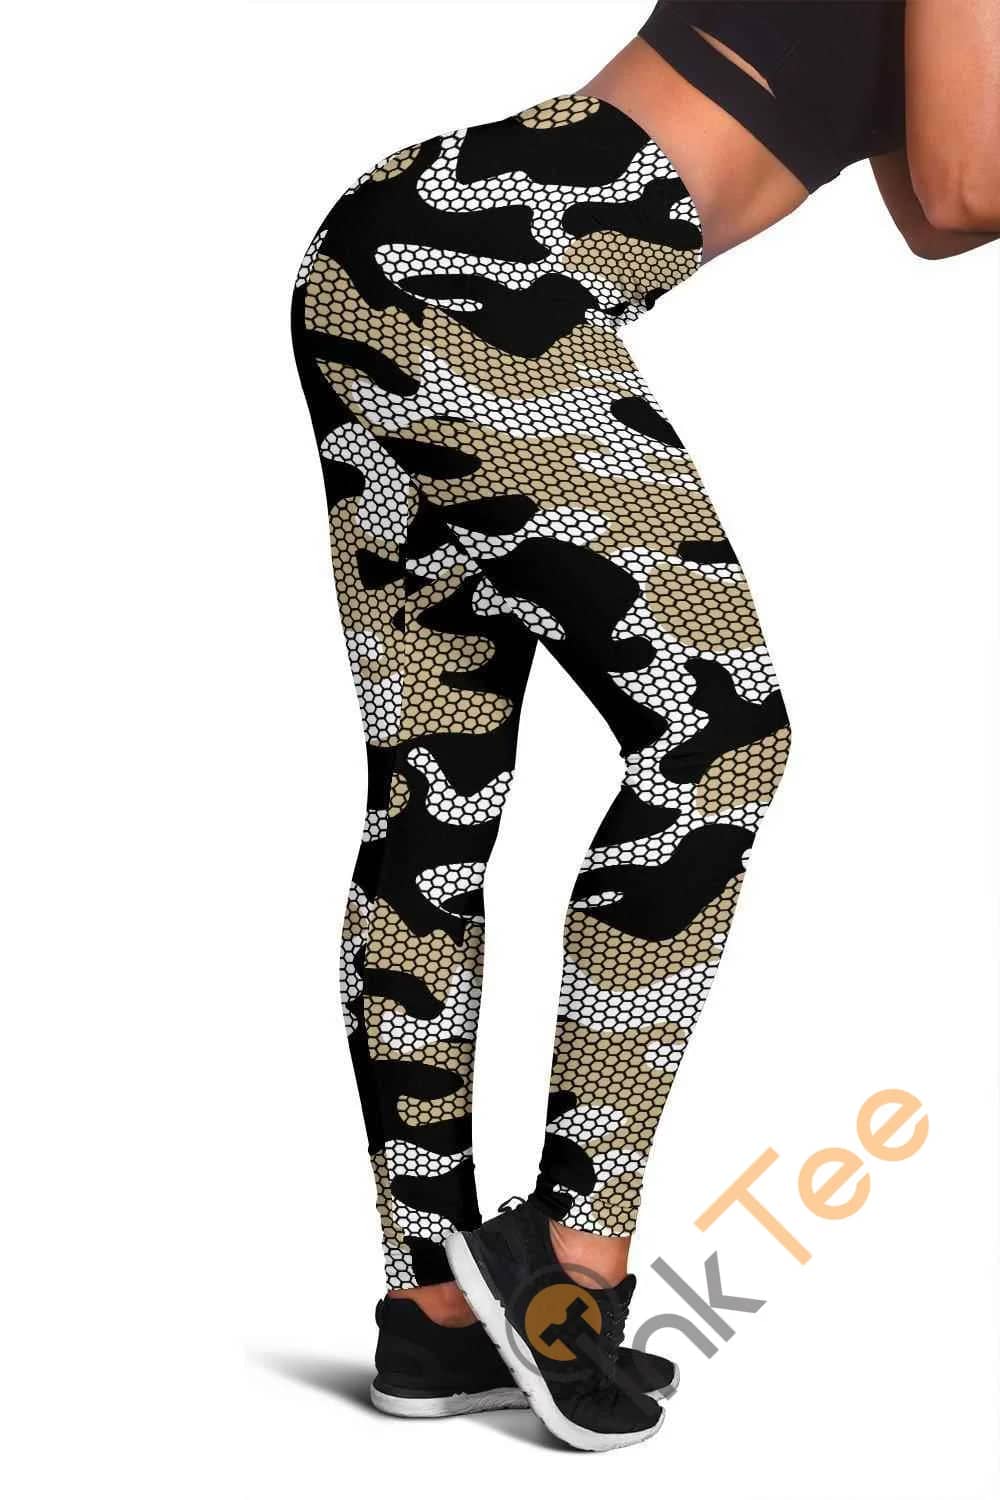 New Orleans Saints Inspired Hex Camo 3D All Over Print For Yoga Fitness Fashion Women's Leggings